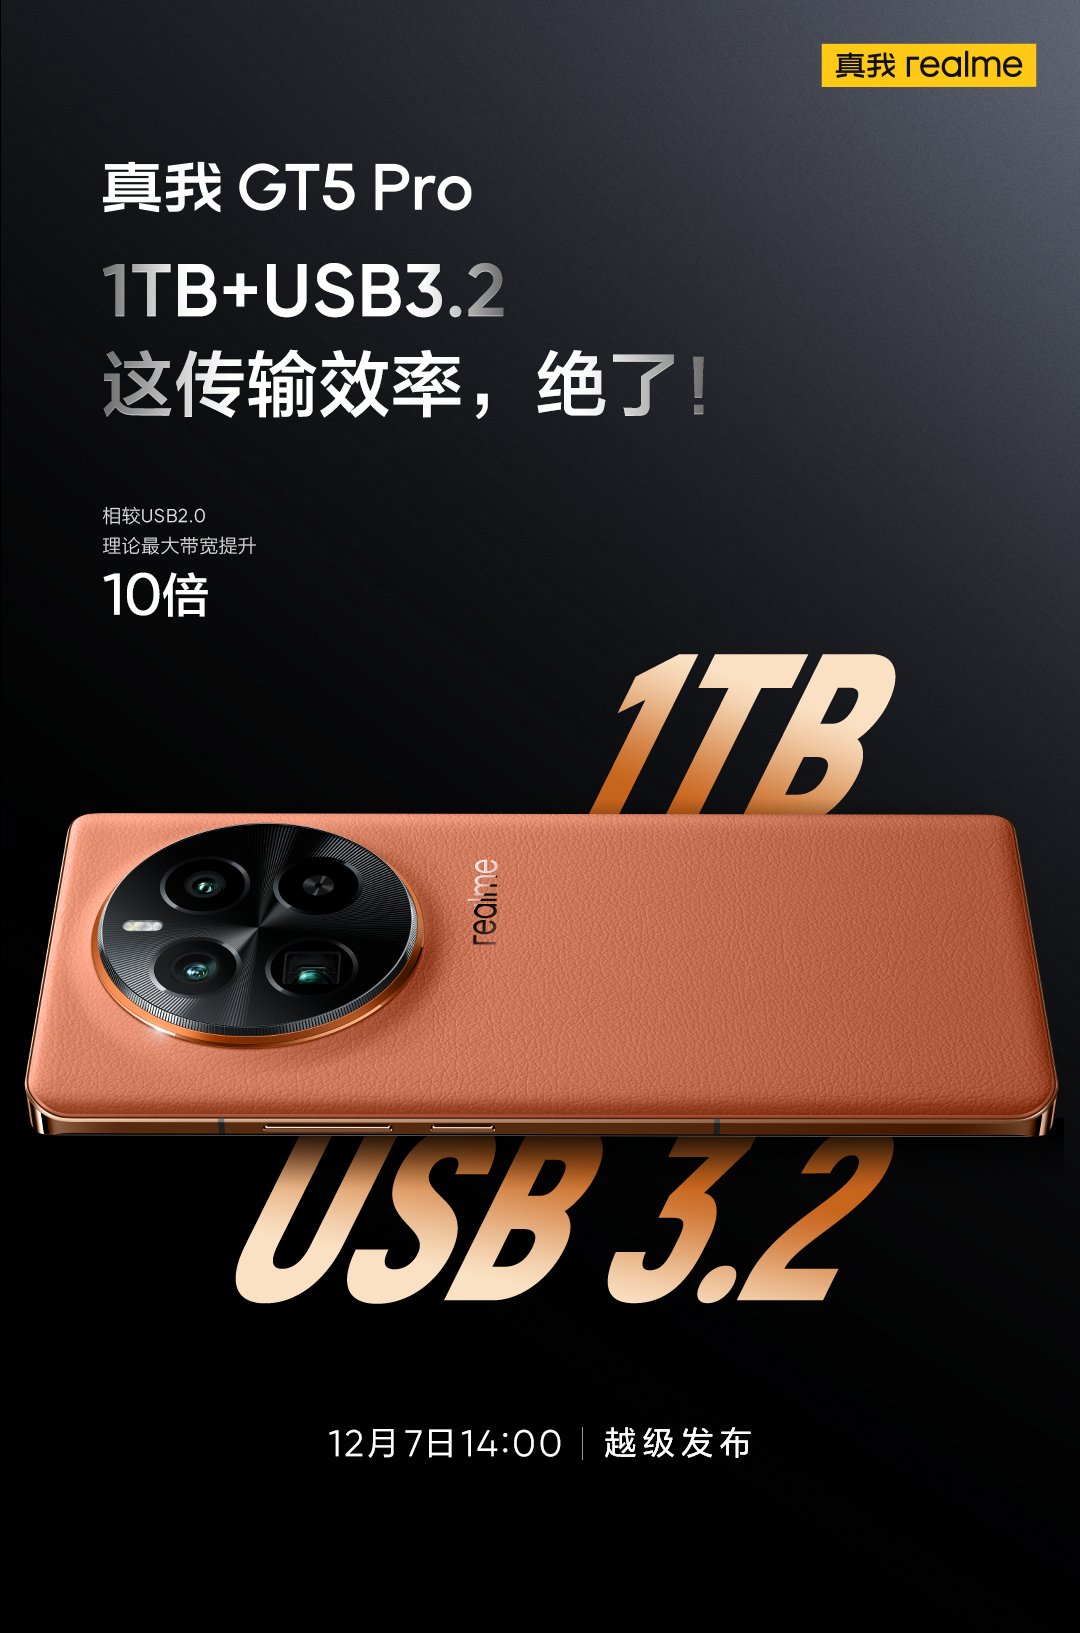 Realme GT 5 Pro 1TB, USB 3.2